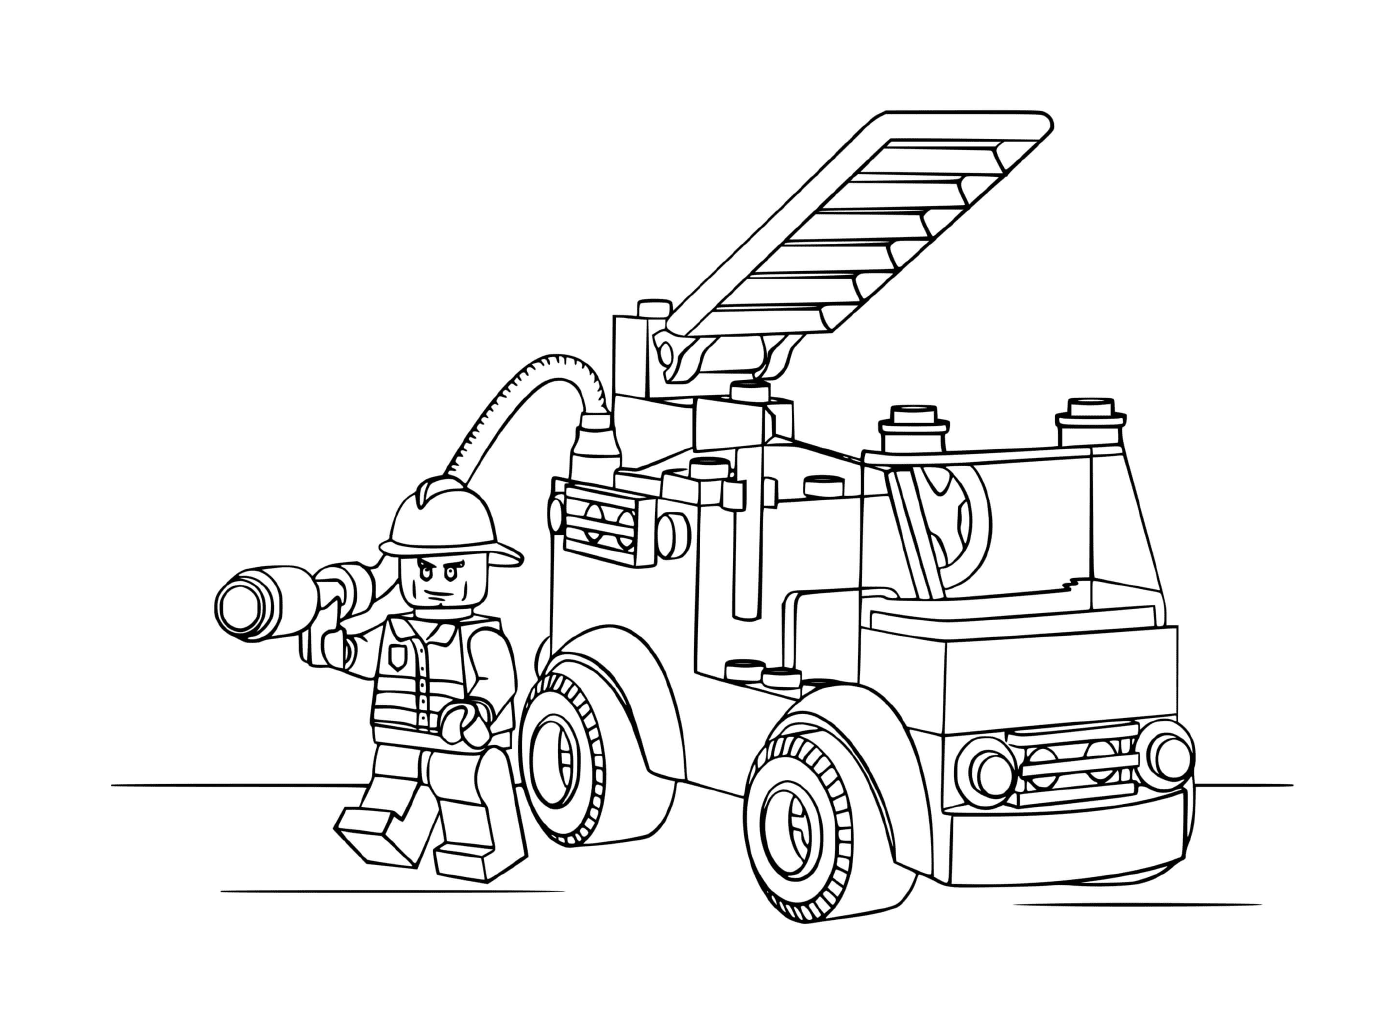  un camion dei pompieri Lego e un pompiere 